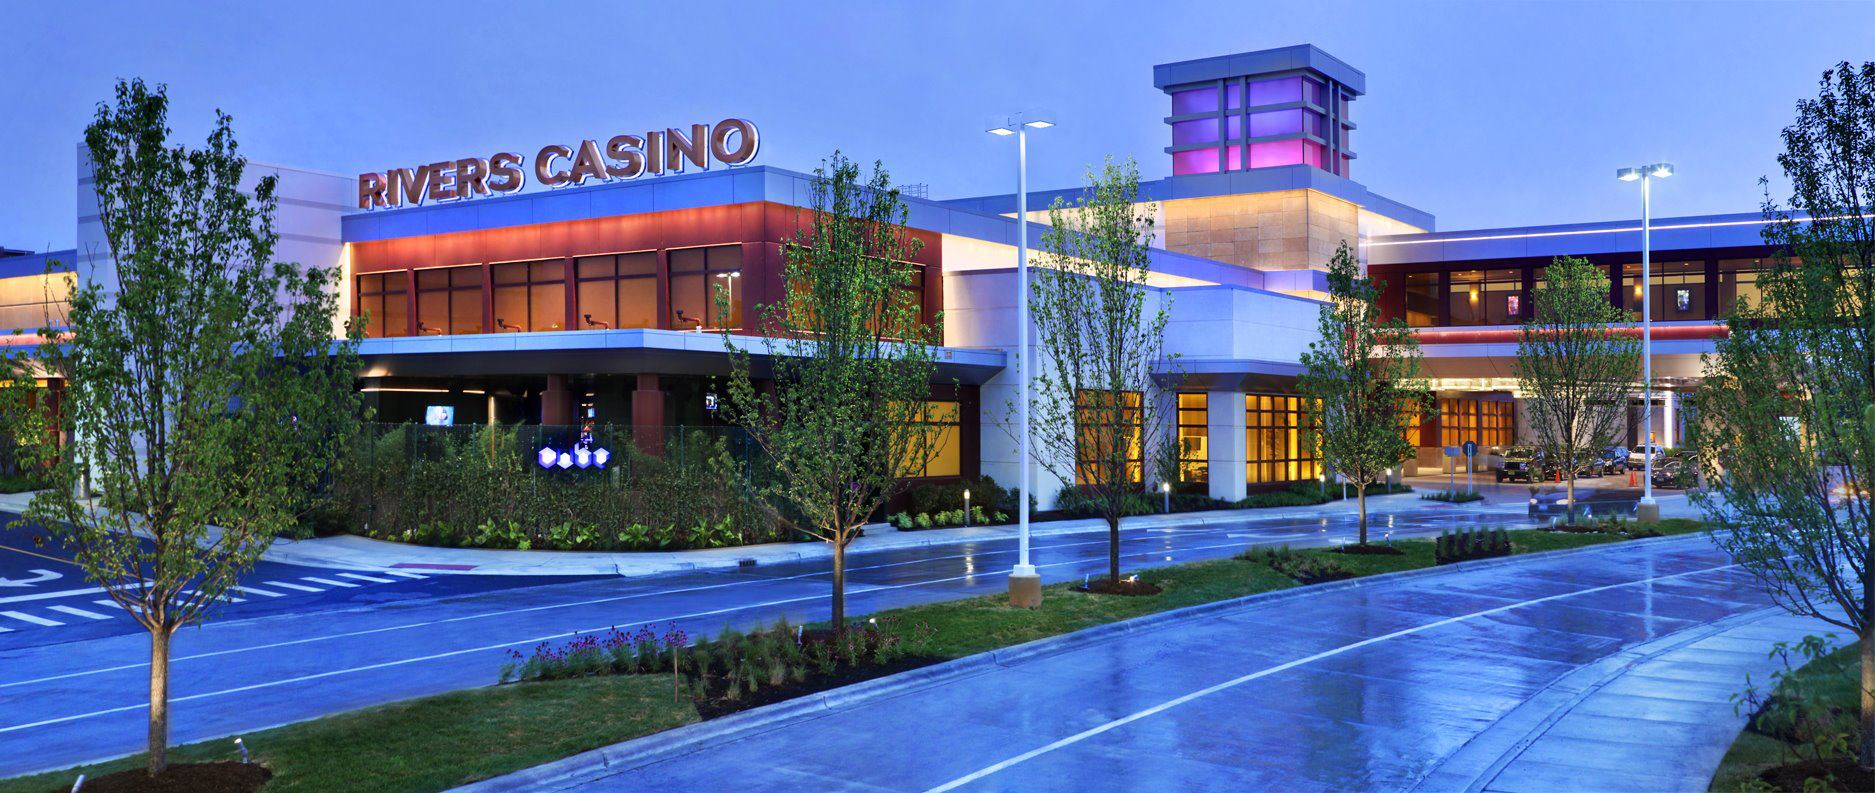 restaurants in rivers casino des plaines